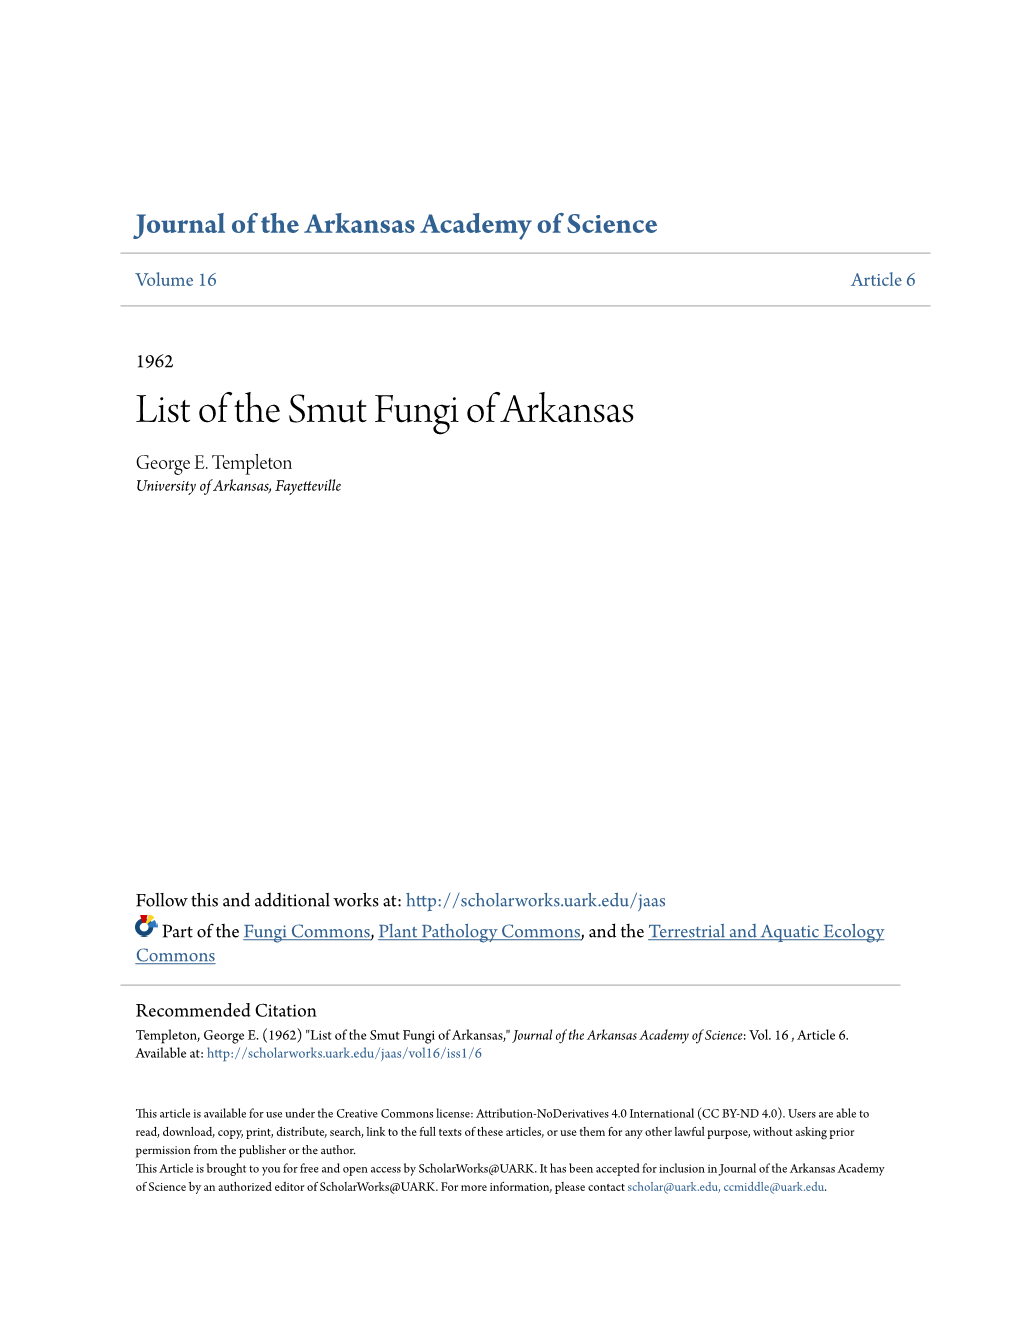 List of the Smut Fungi of Arkansas George E